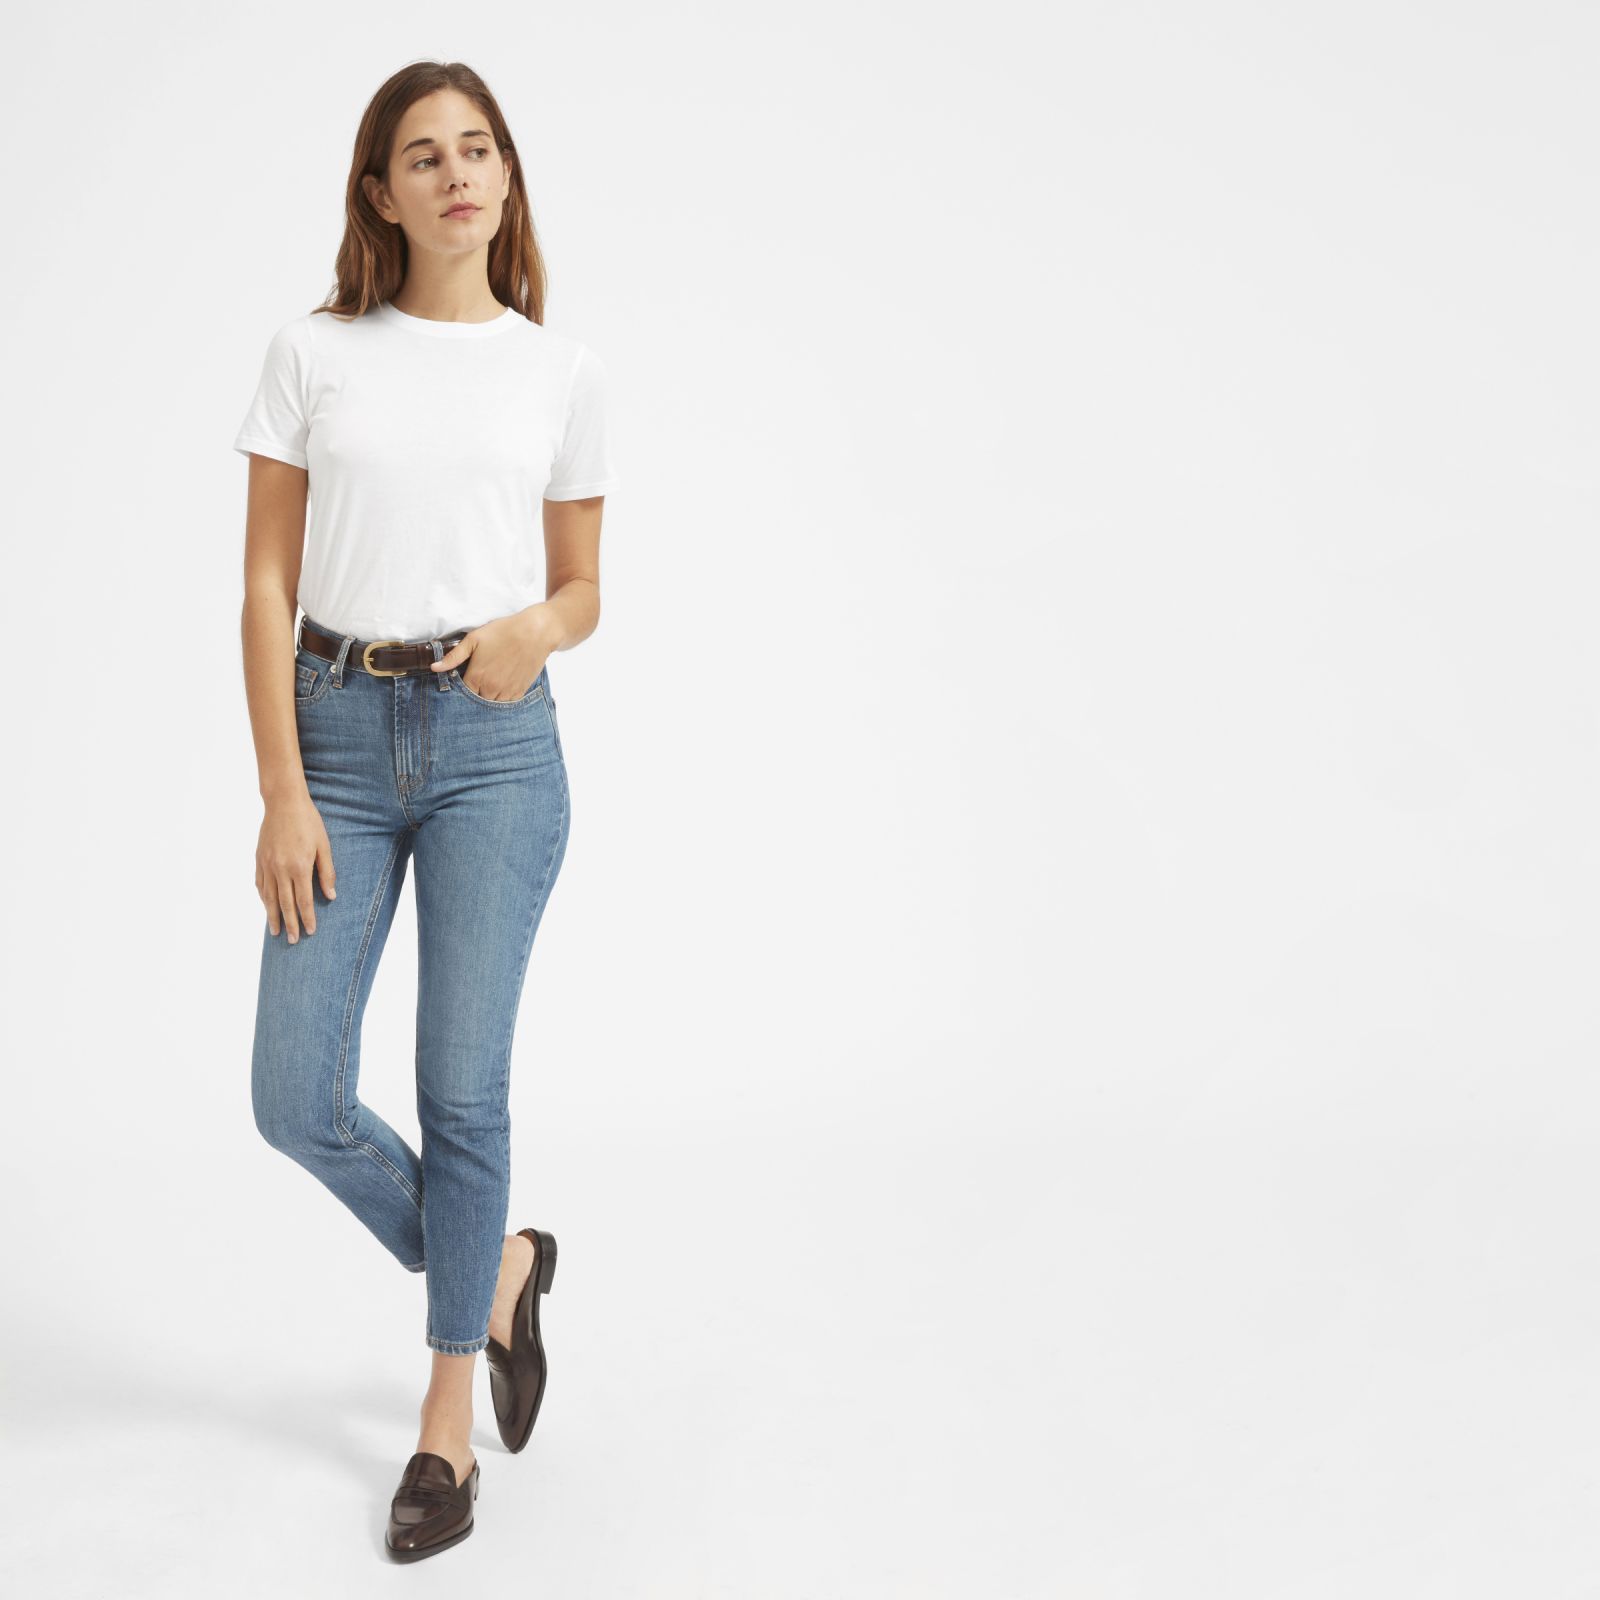 Women's Cotton Crew T-Shirt by Everlane in White, Size XXS | Everlane